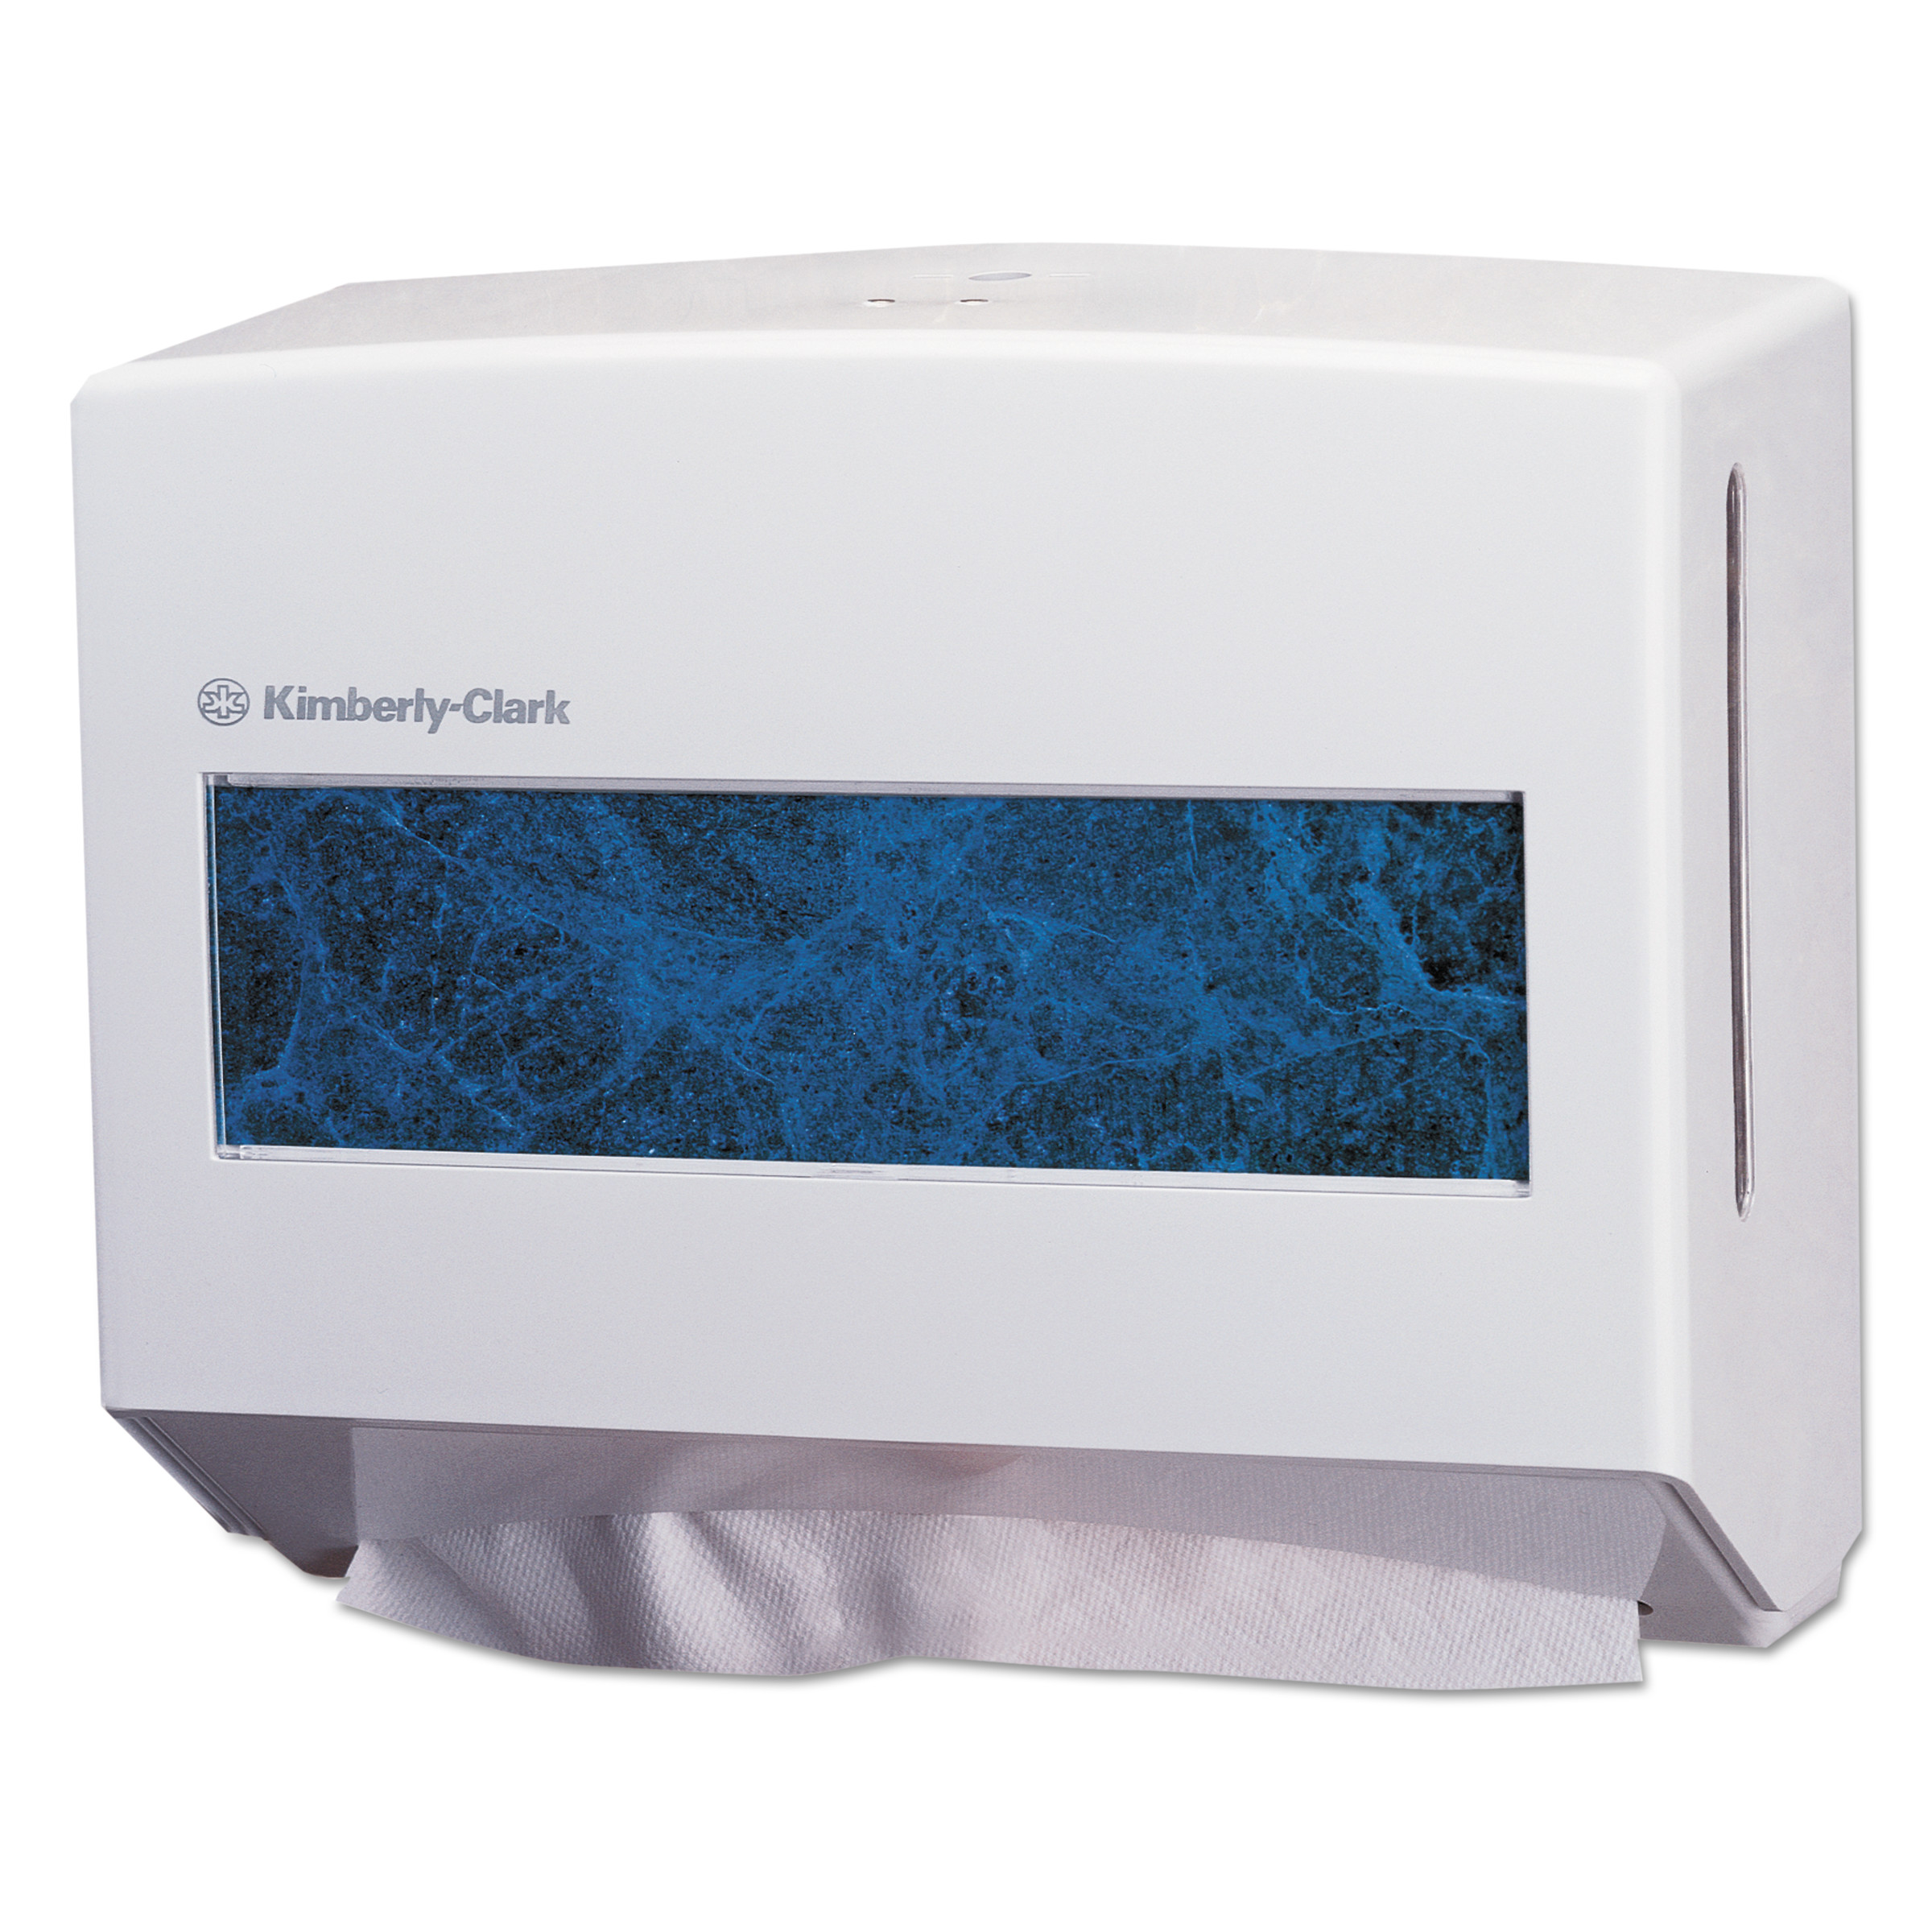 Kimberly-Clark Professional* Scottfold Compact Towel Dispenser, 10 3/4w x 4 3/4d x 9h, White - image 1 of 2